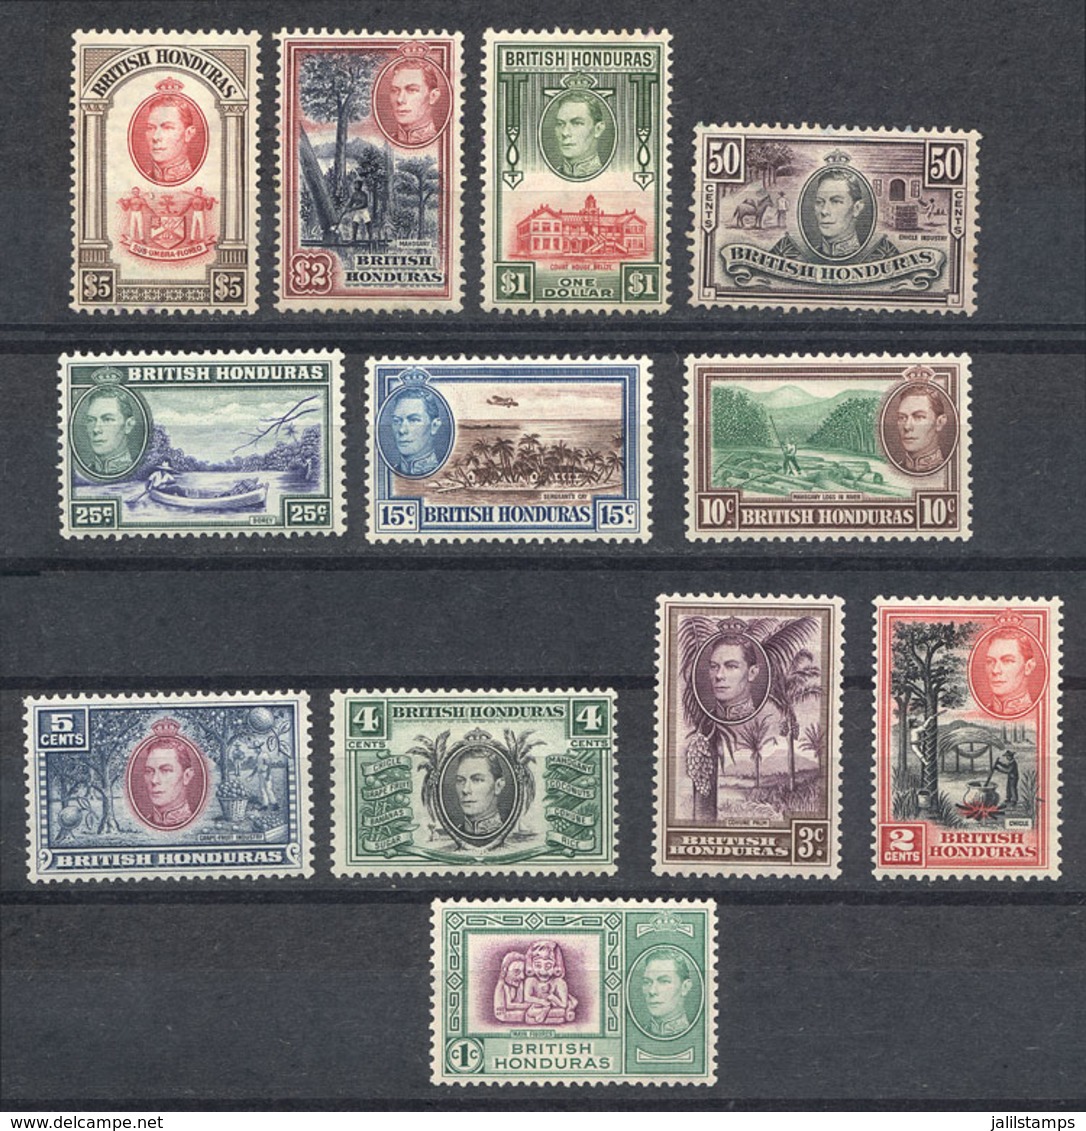 BRITISH HONDURAS: Sc.115/126, 1938 Complete Set Of 12 Values, Very Fine Quality, Catalog Value US$77.85 - Brits-Honduras (...-1970)